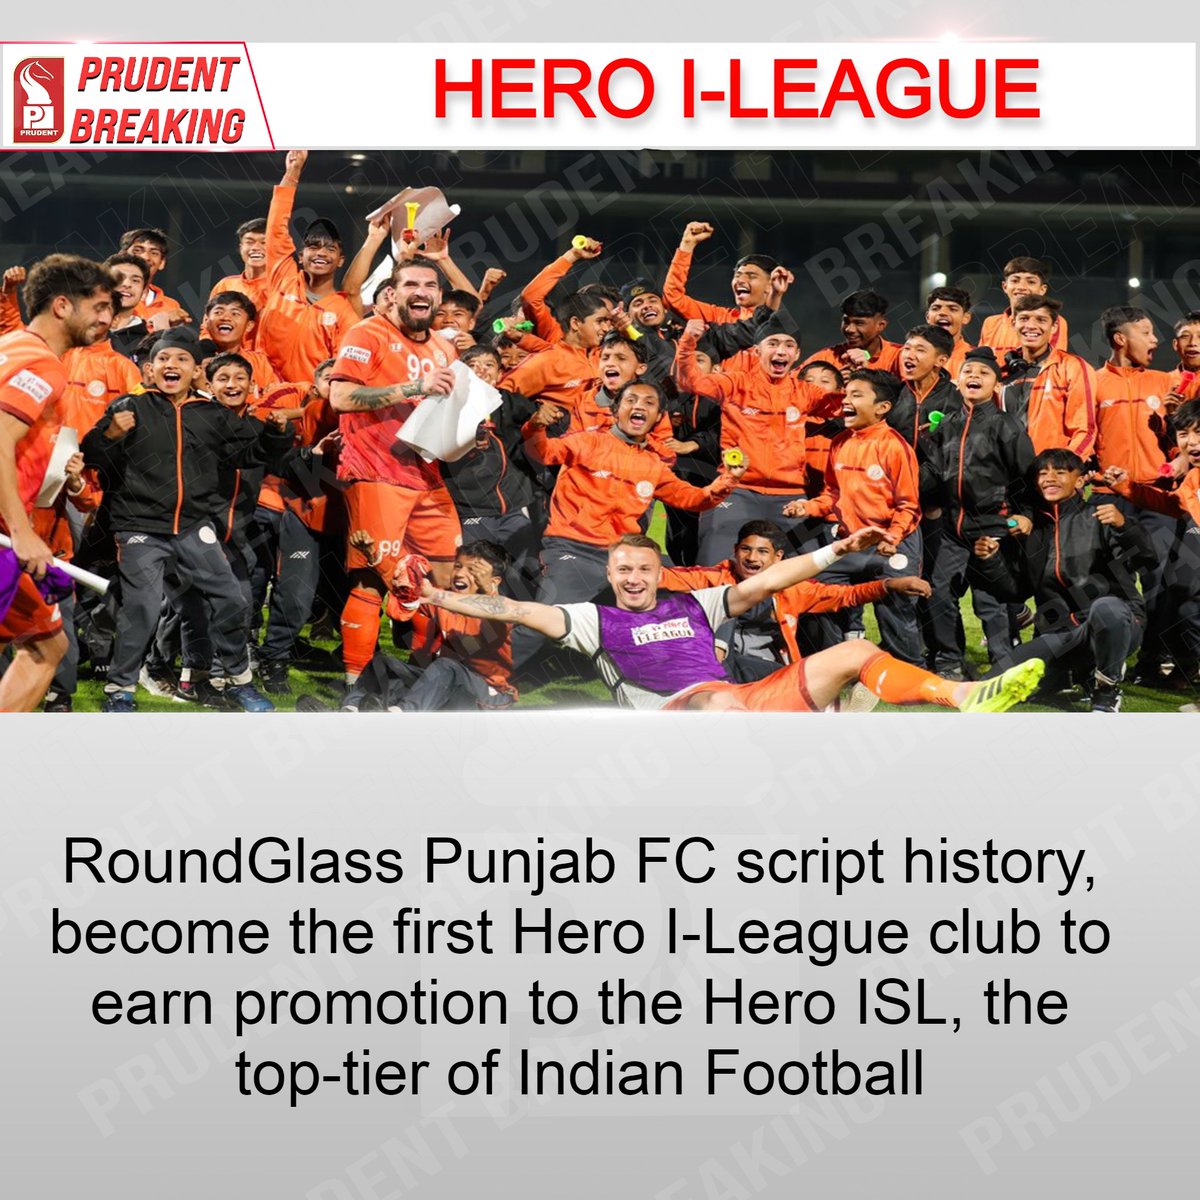 #IndianFootball #RGPFC #HeroILeague 
@RGPunjabFC